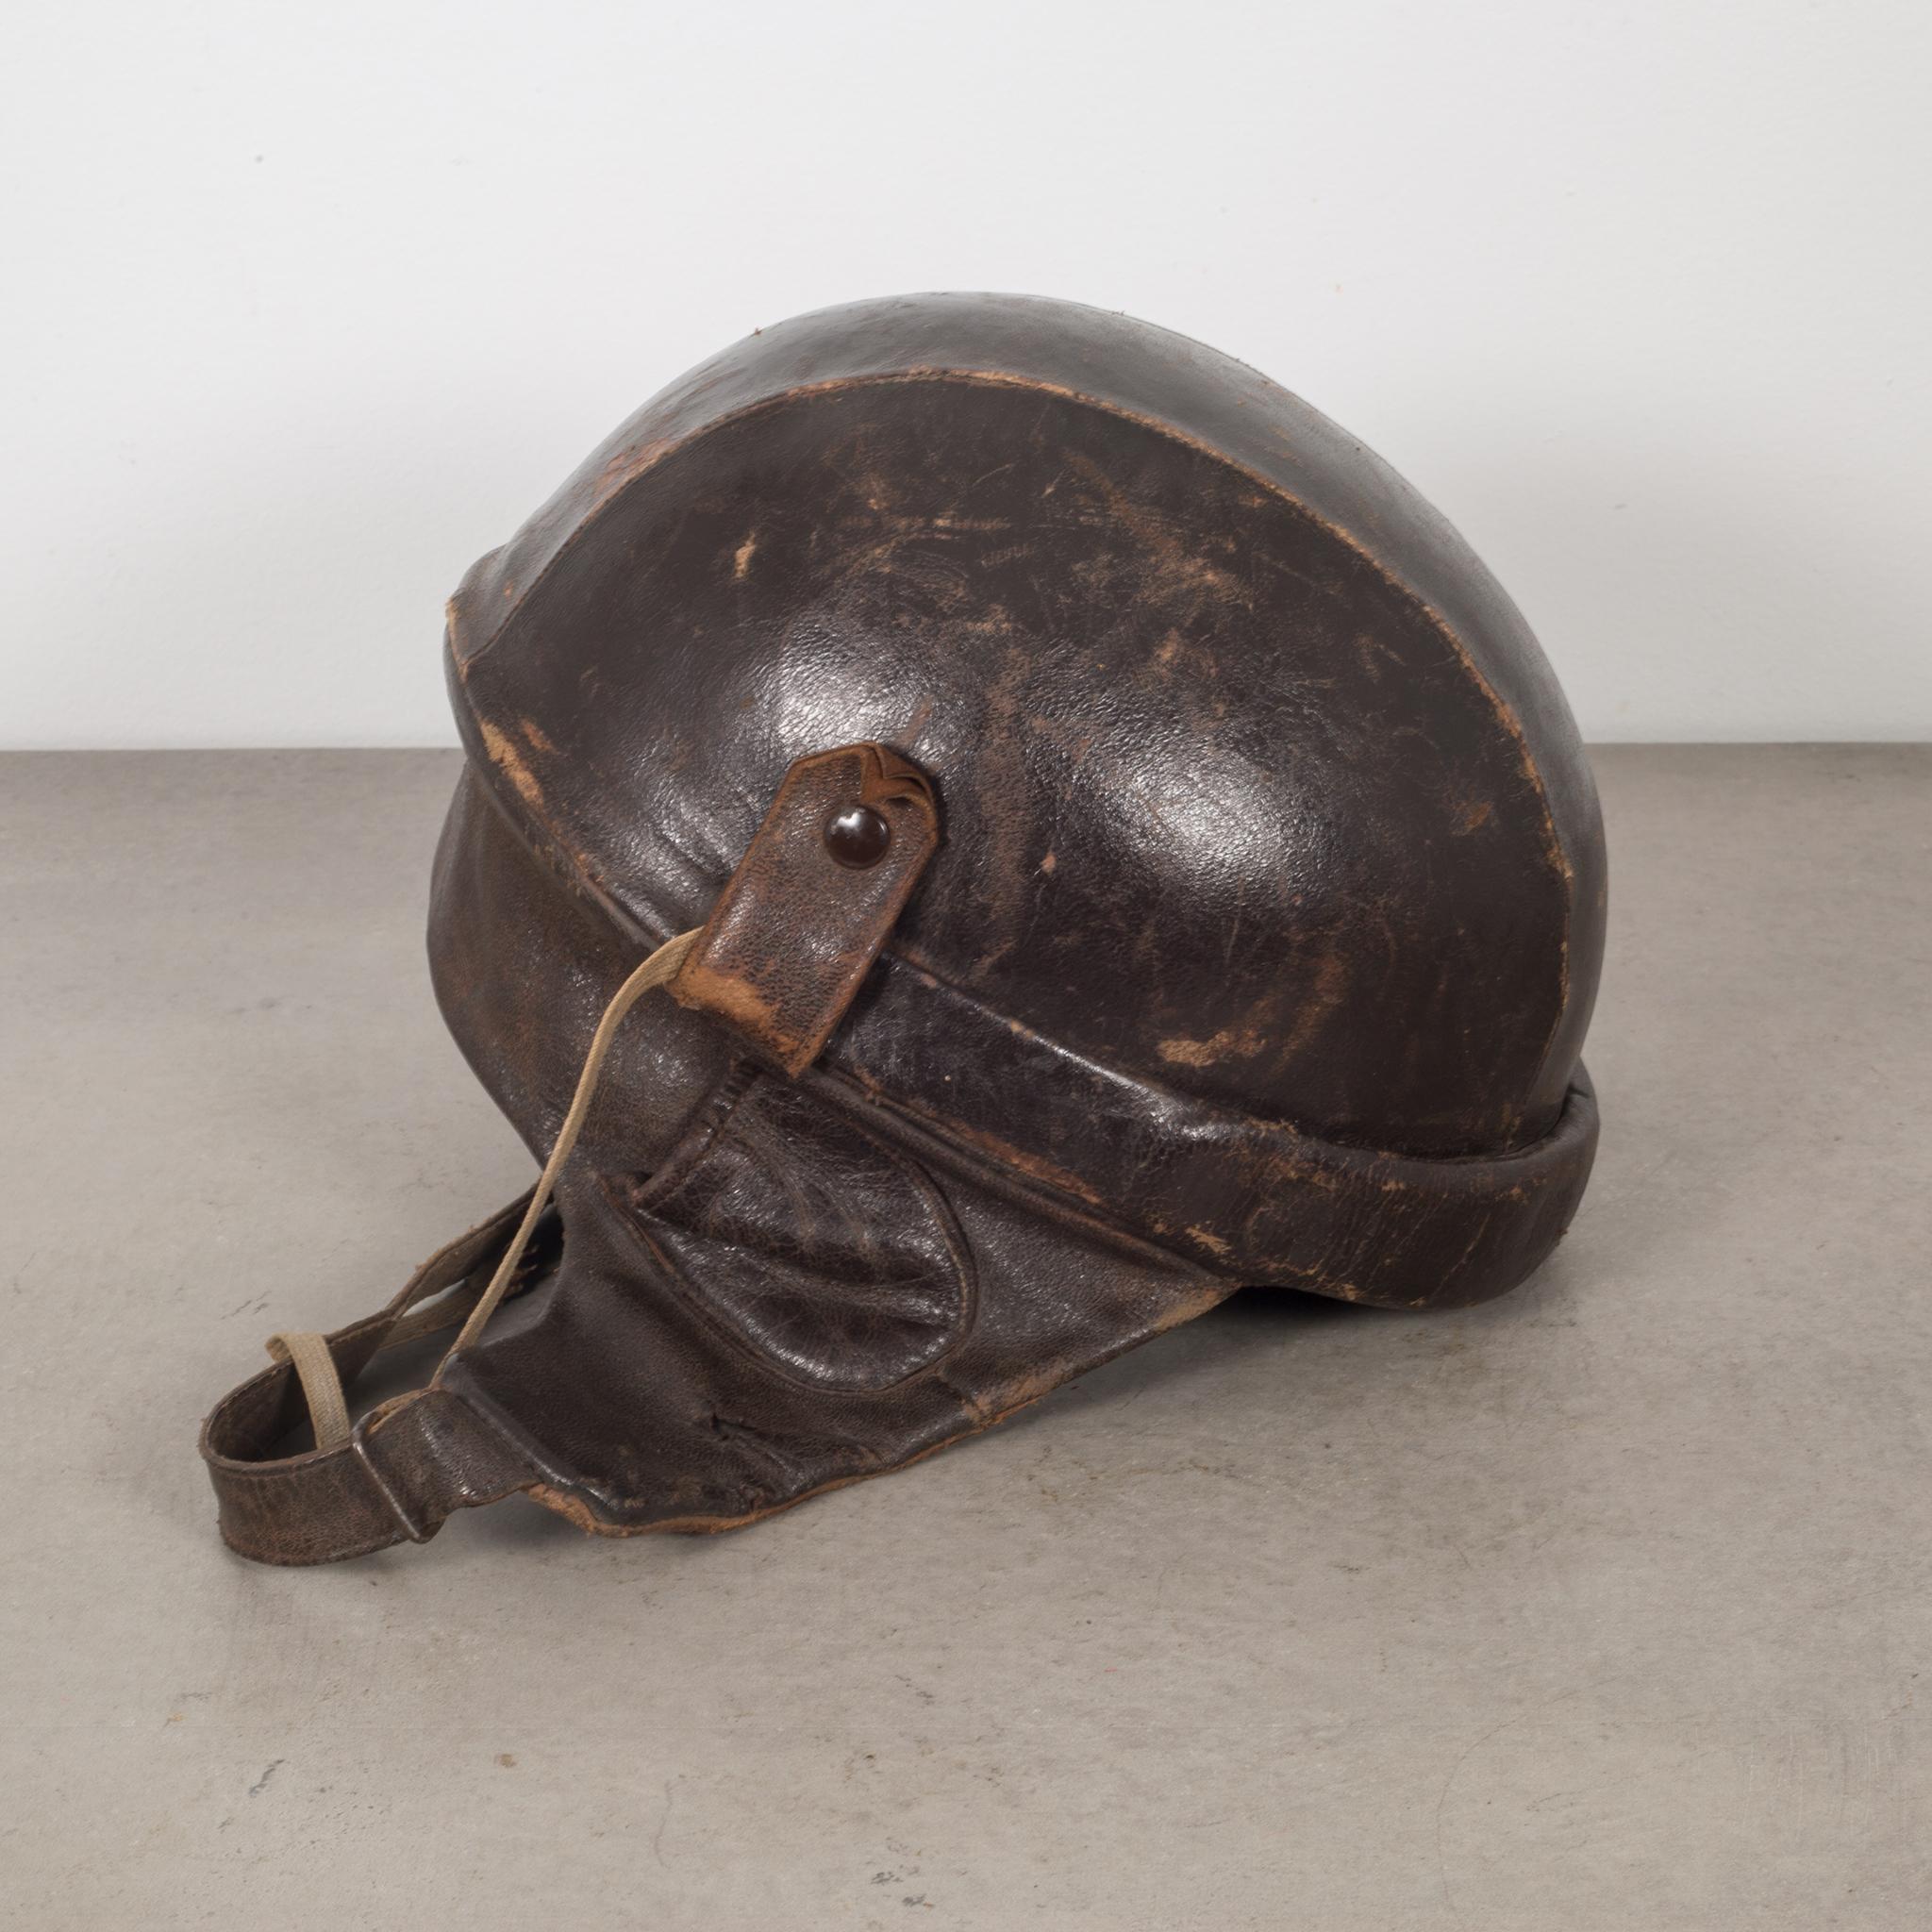 Industrial Leather Half Bowl Motorcycle Helmet, circa 1940